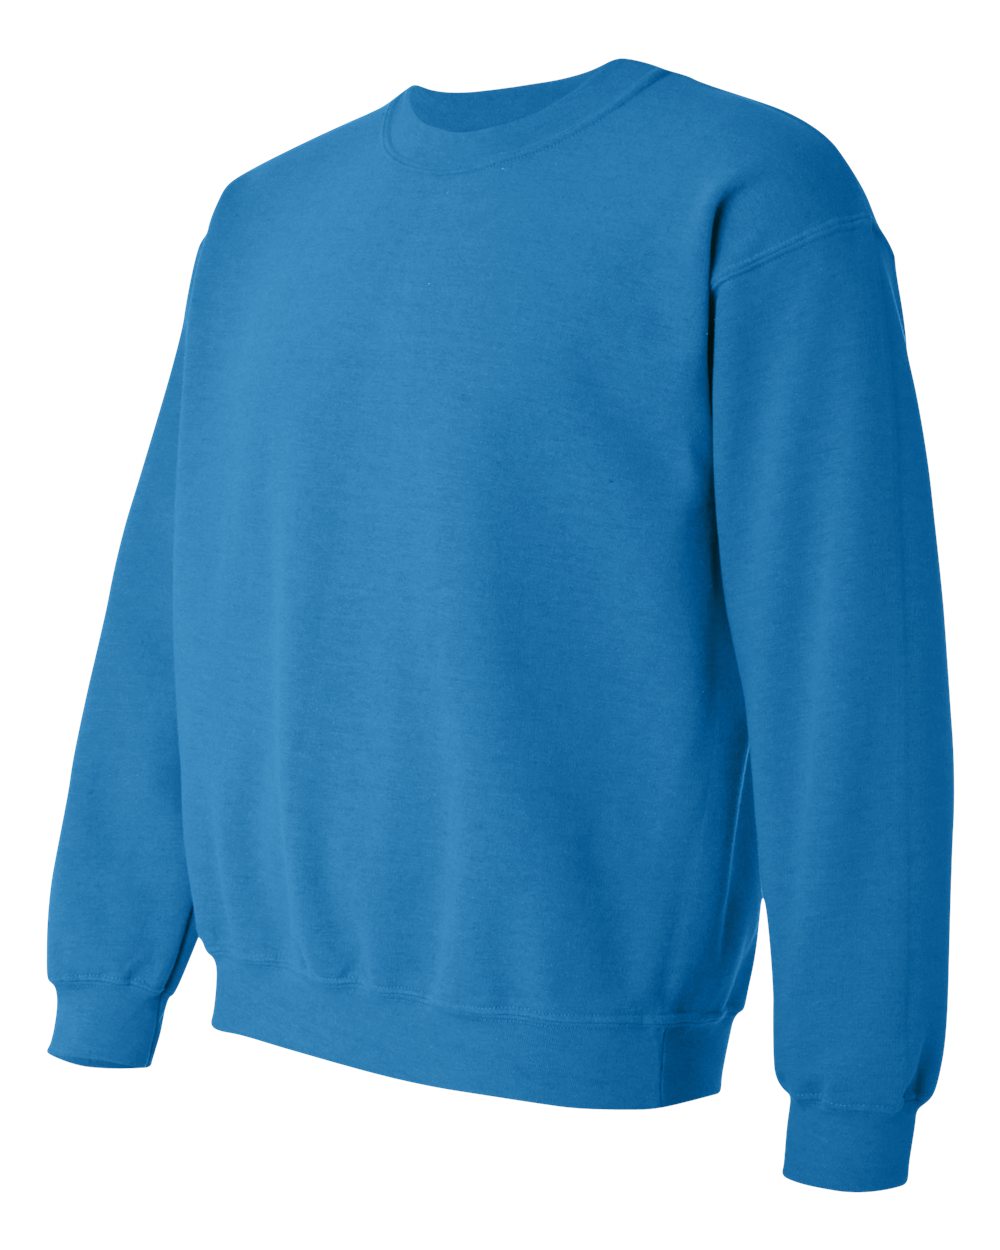 Gildan Heavy Blend Crew Neck sweater GI18000 Antique Sapphire Blue